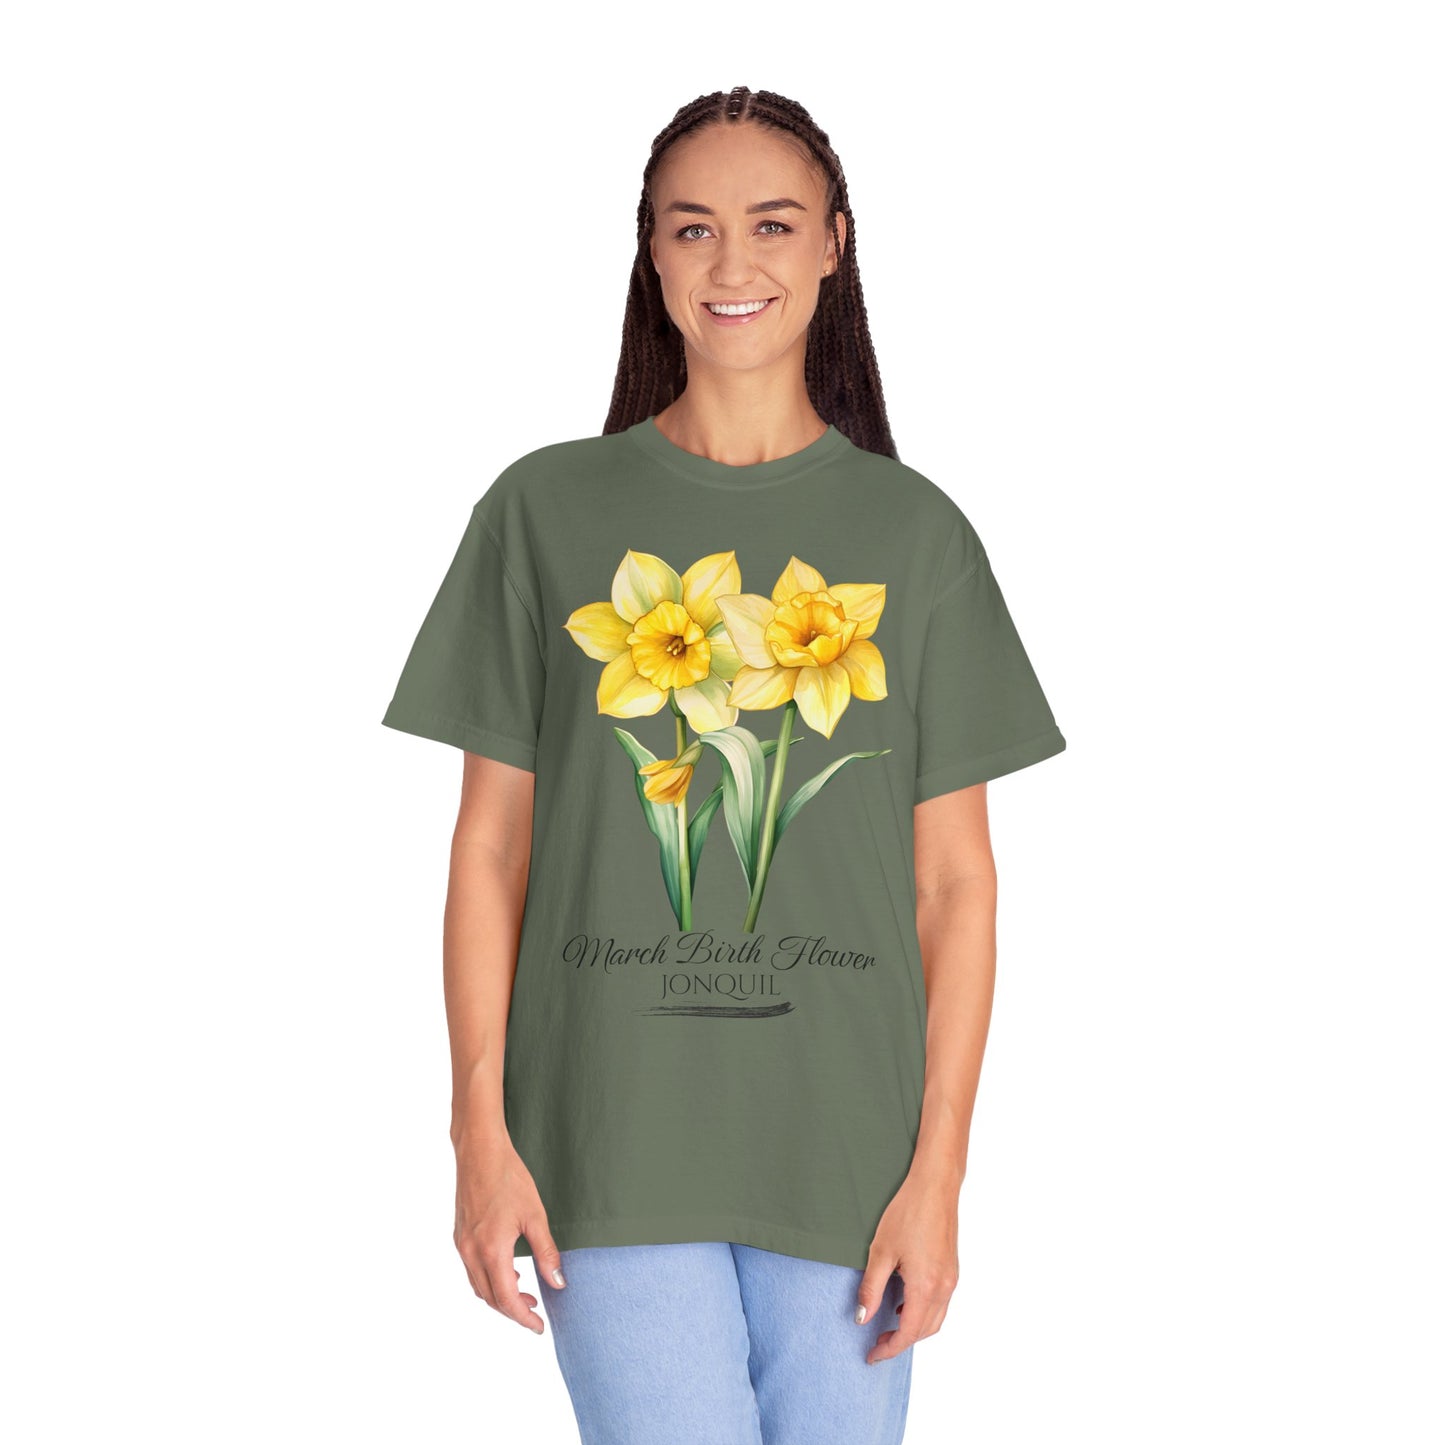 March Birth Flower "Jonquil" - Unisex Garment-Dyed T-shirt